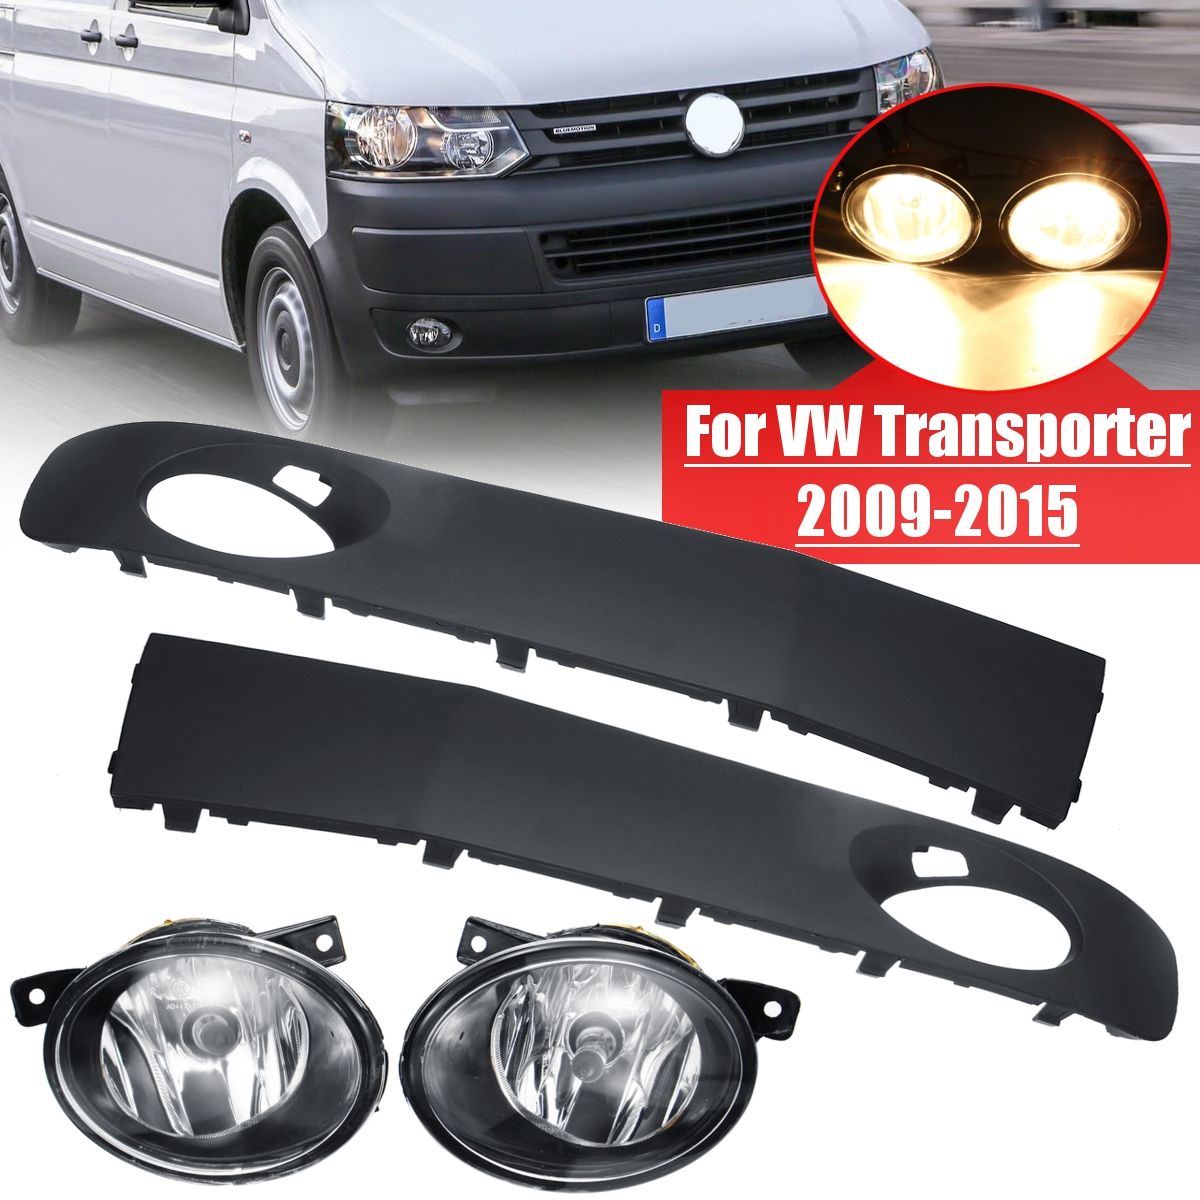 Pair-Car-Front-Bumper-Fog-Lights-Lamp-with-Grilles-Cover-For-VW-Transporter-Caravelle-2009-2015-1610682